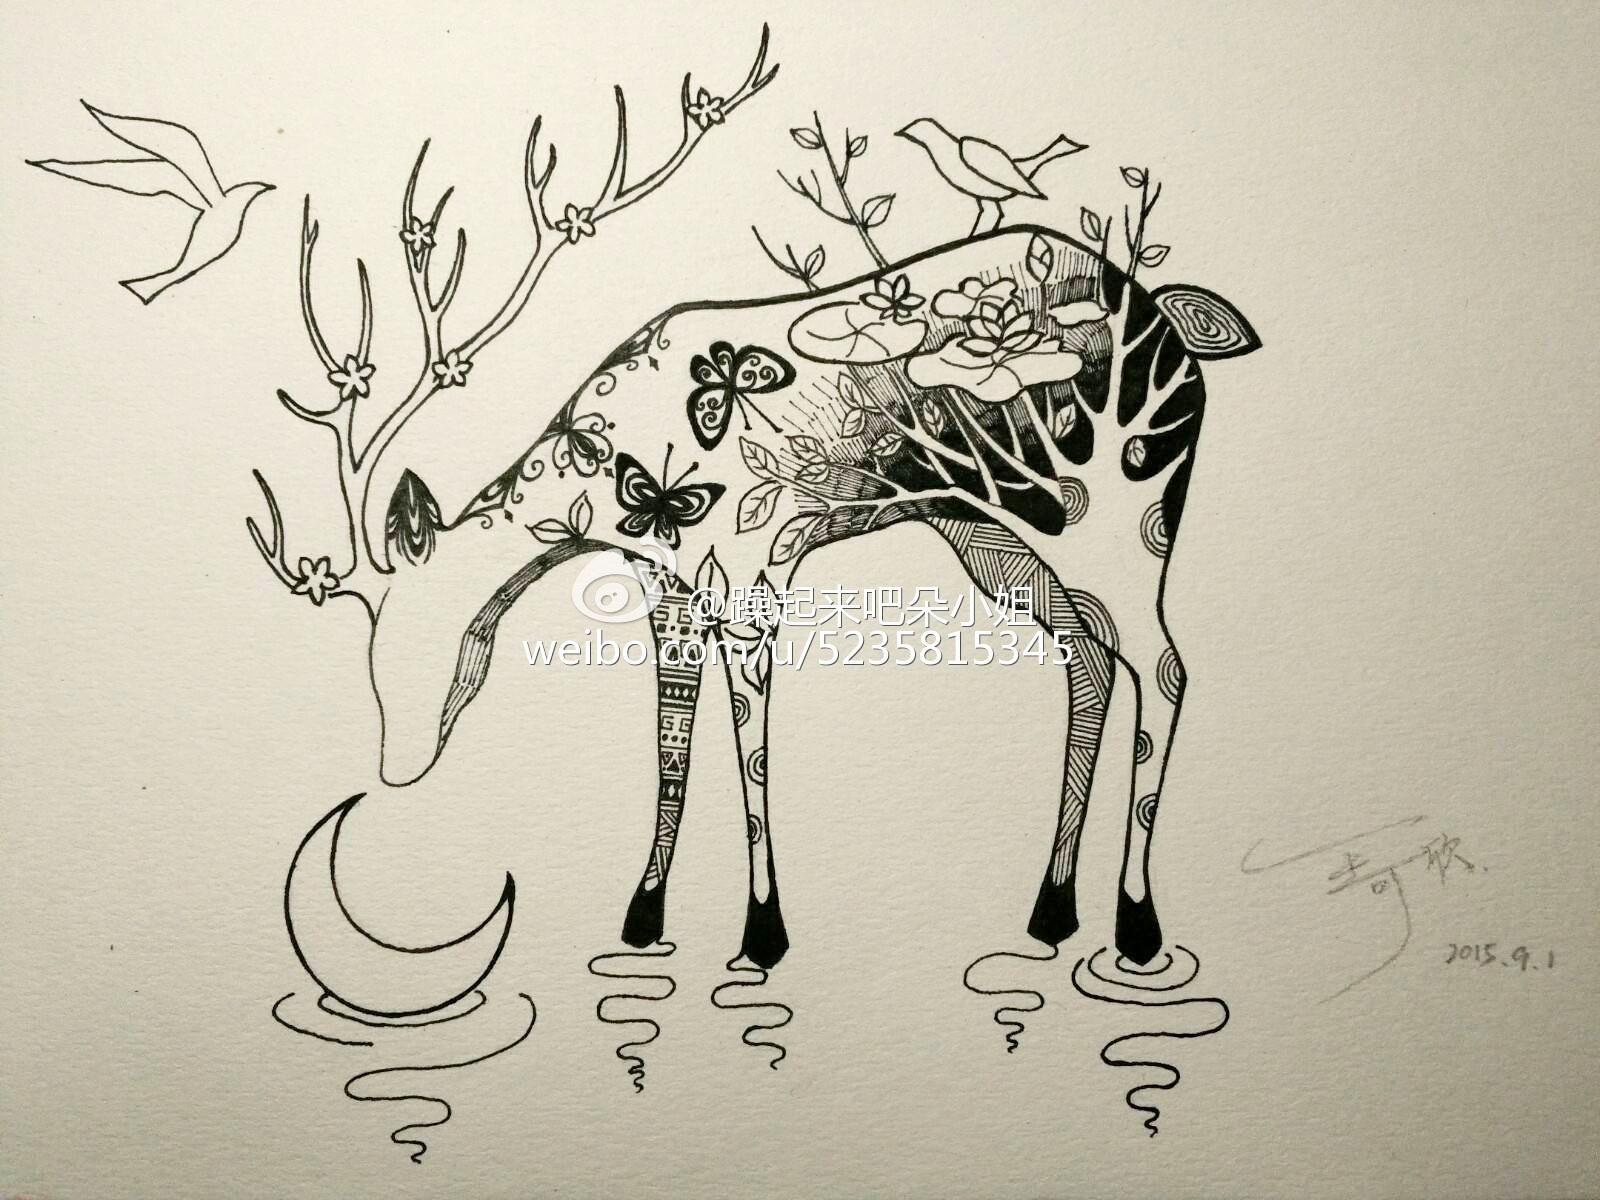 dorothy wang: 黑白装饰画 麋鹿之森 温柔月色 文艺 原创插画 微博